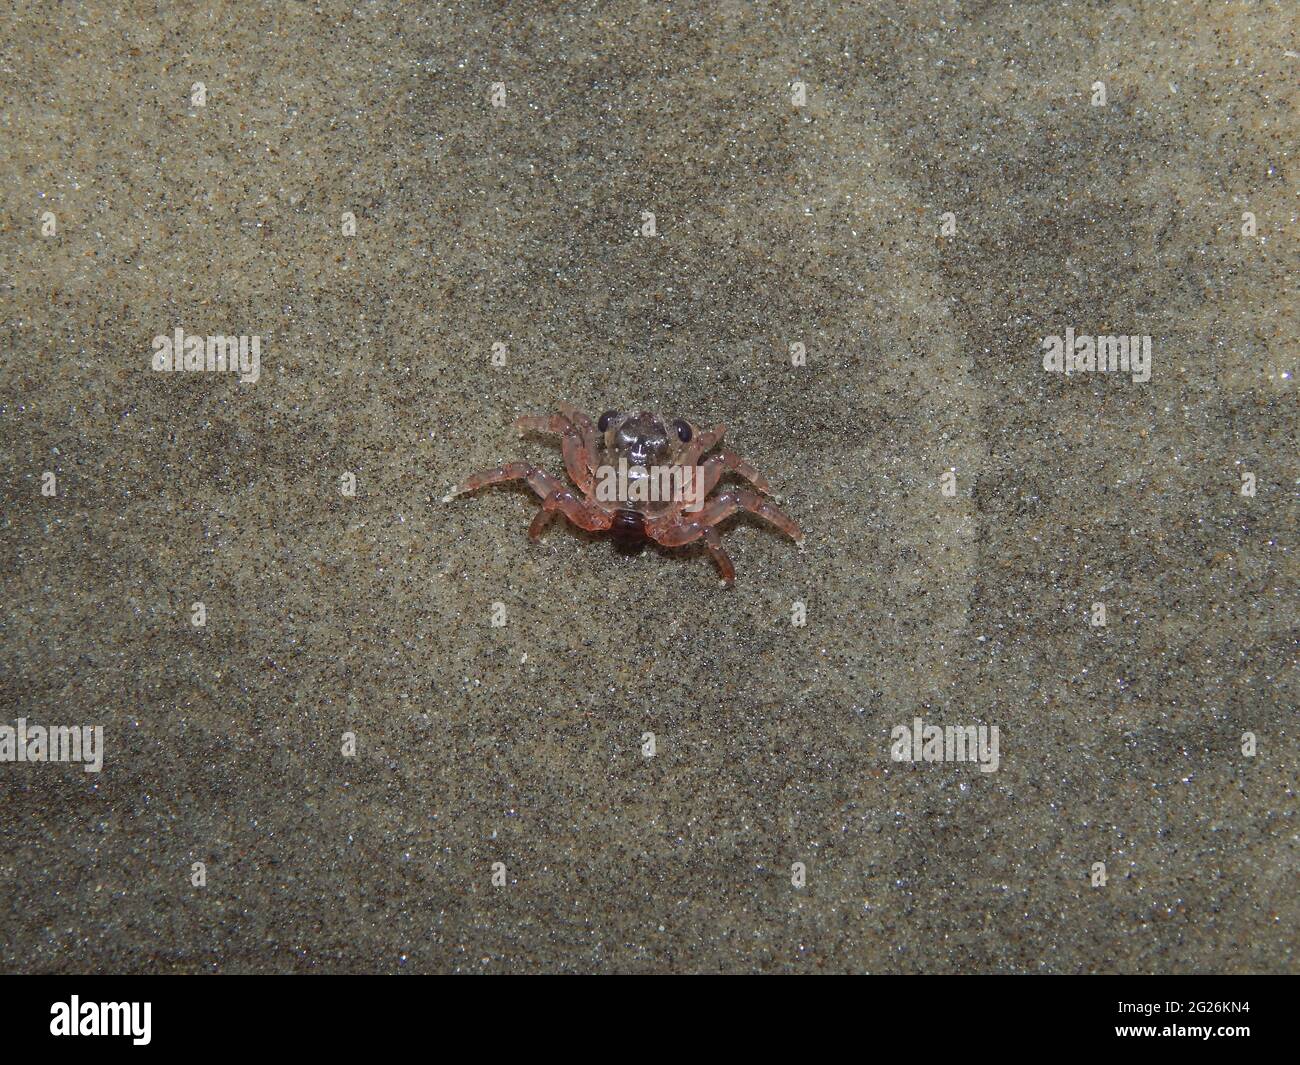 Crab foetus on the Manzanilla Beach, Trinidad. Stock Photo